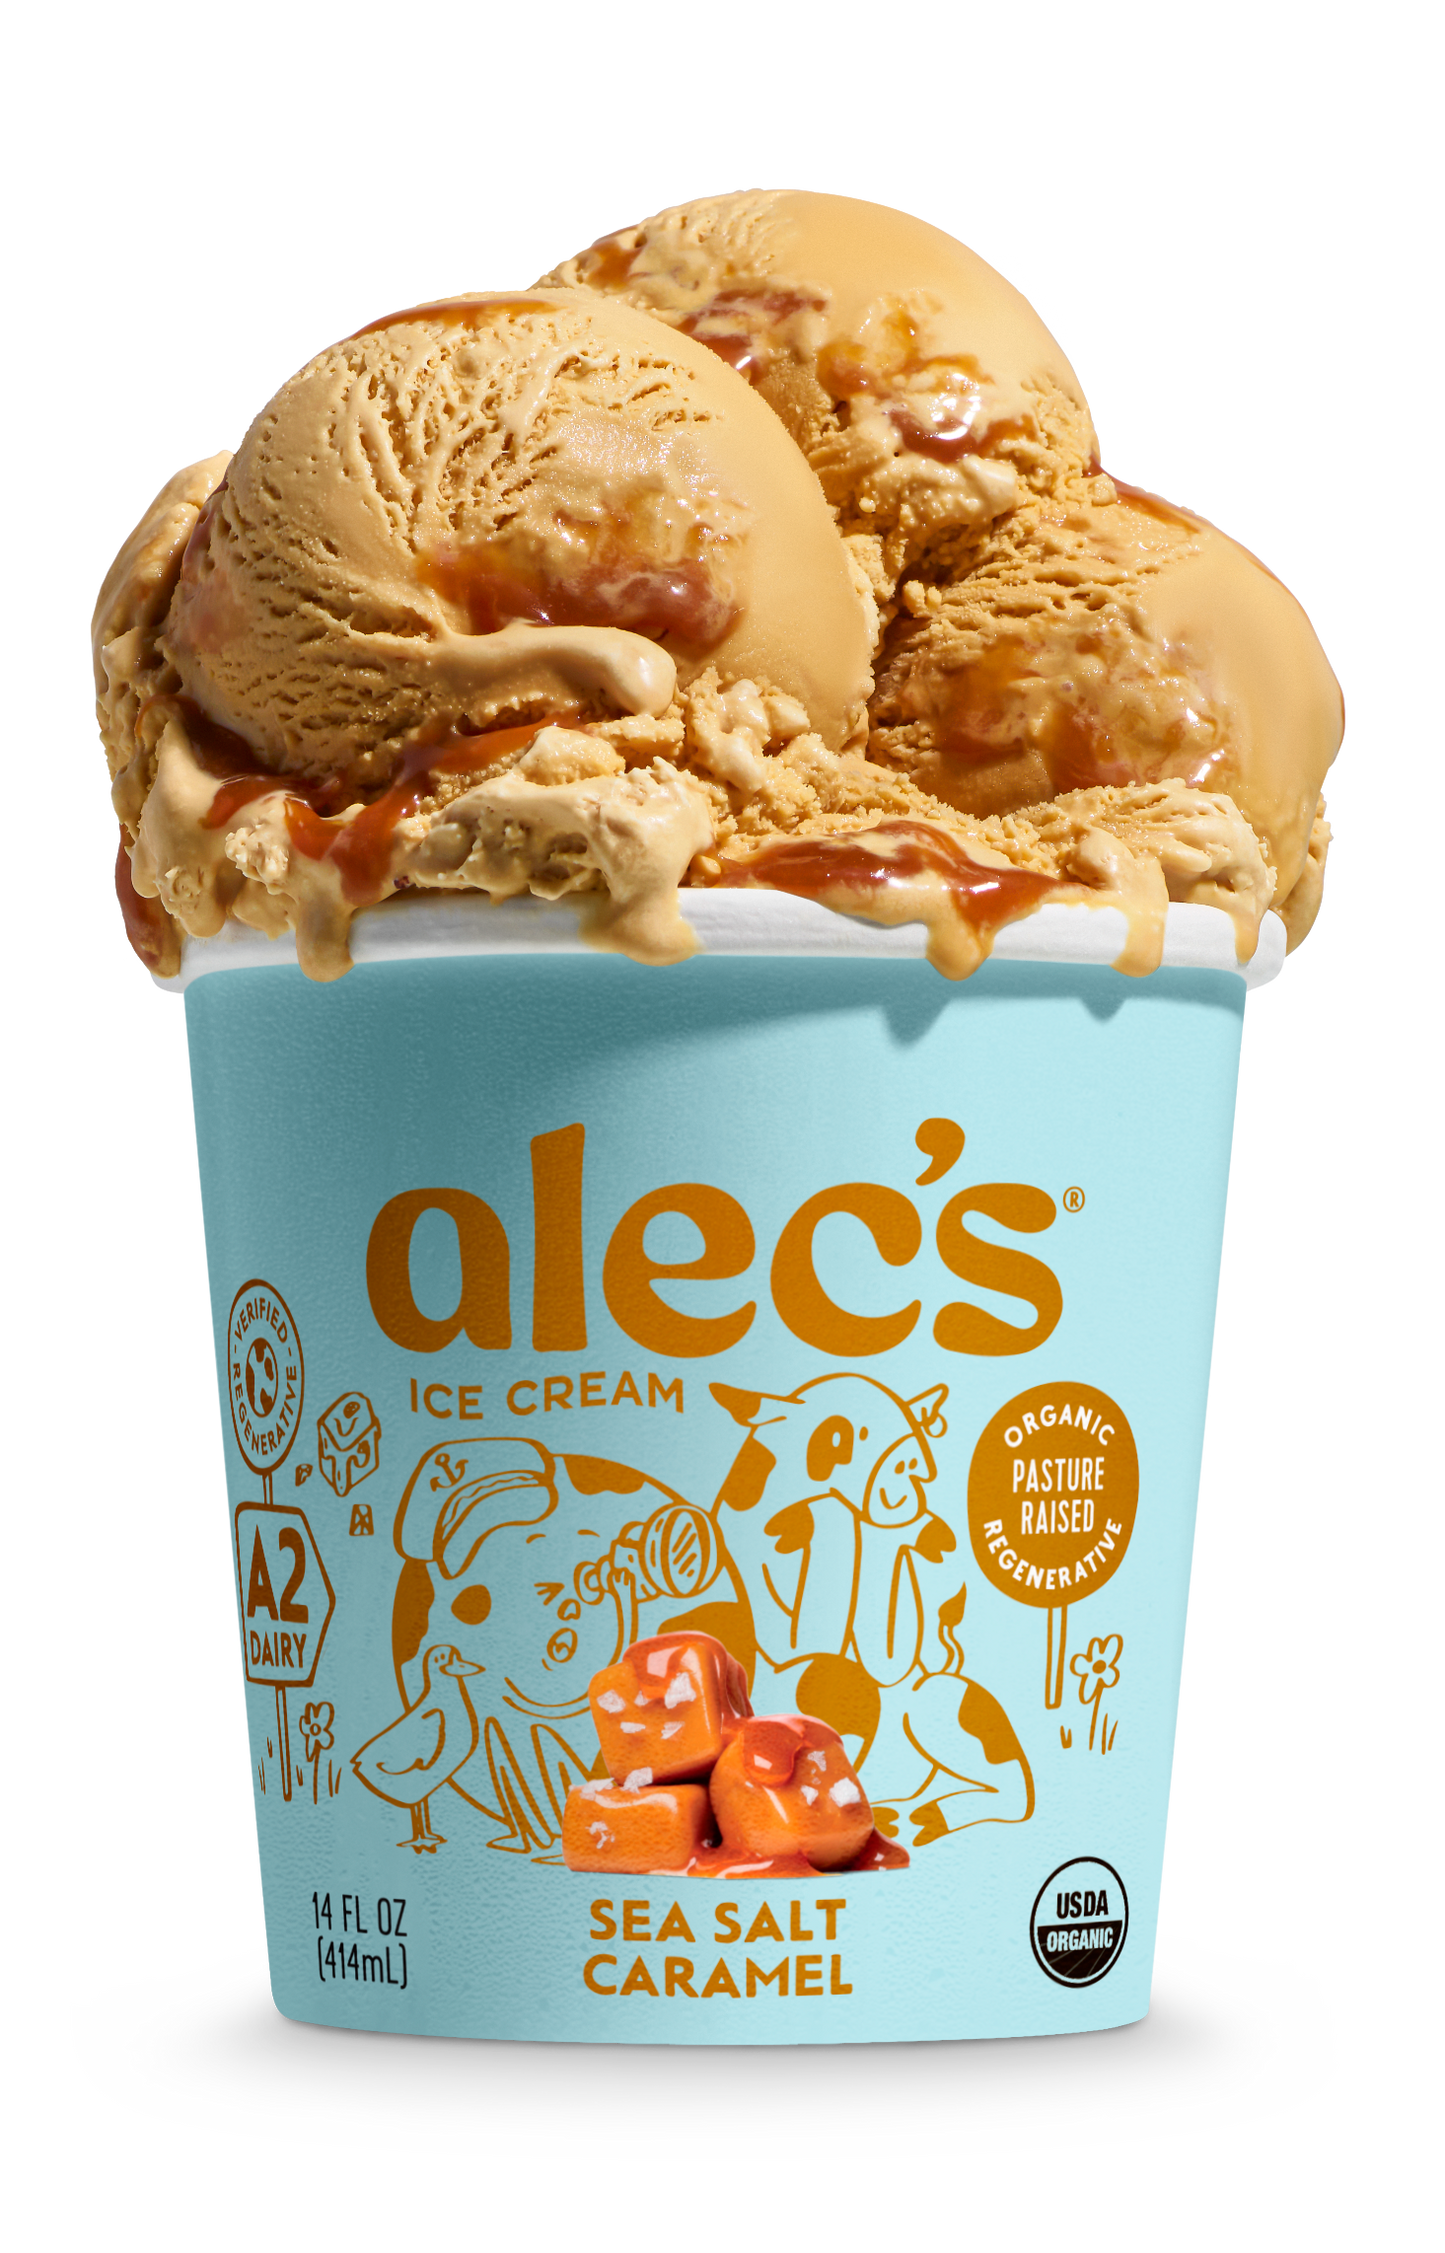 Sea Salt Caramel Alec's Ice Cream Flavor